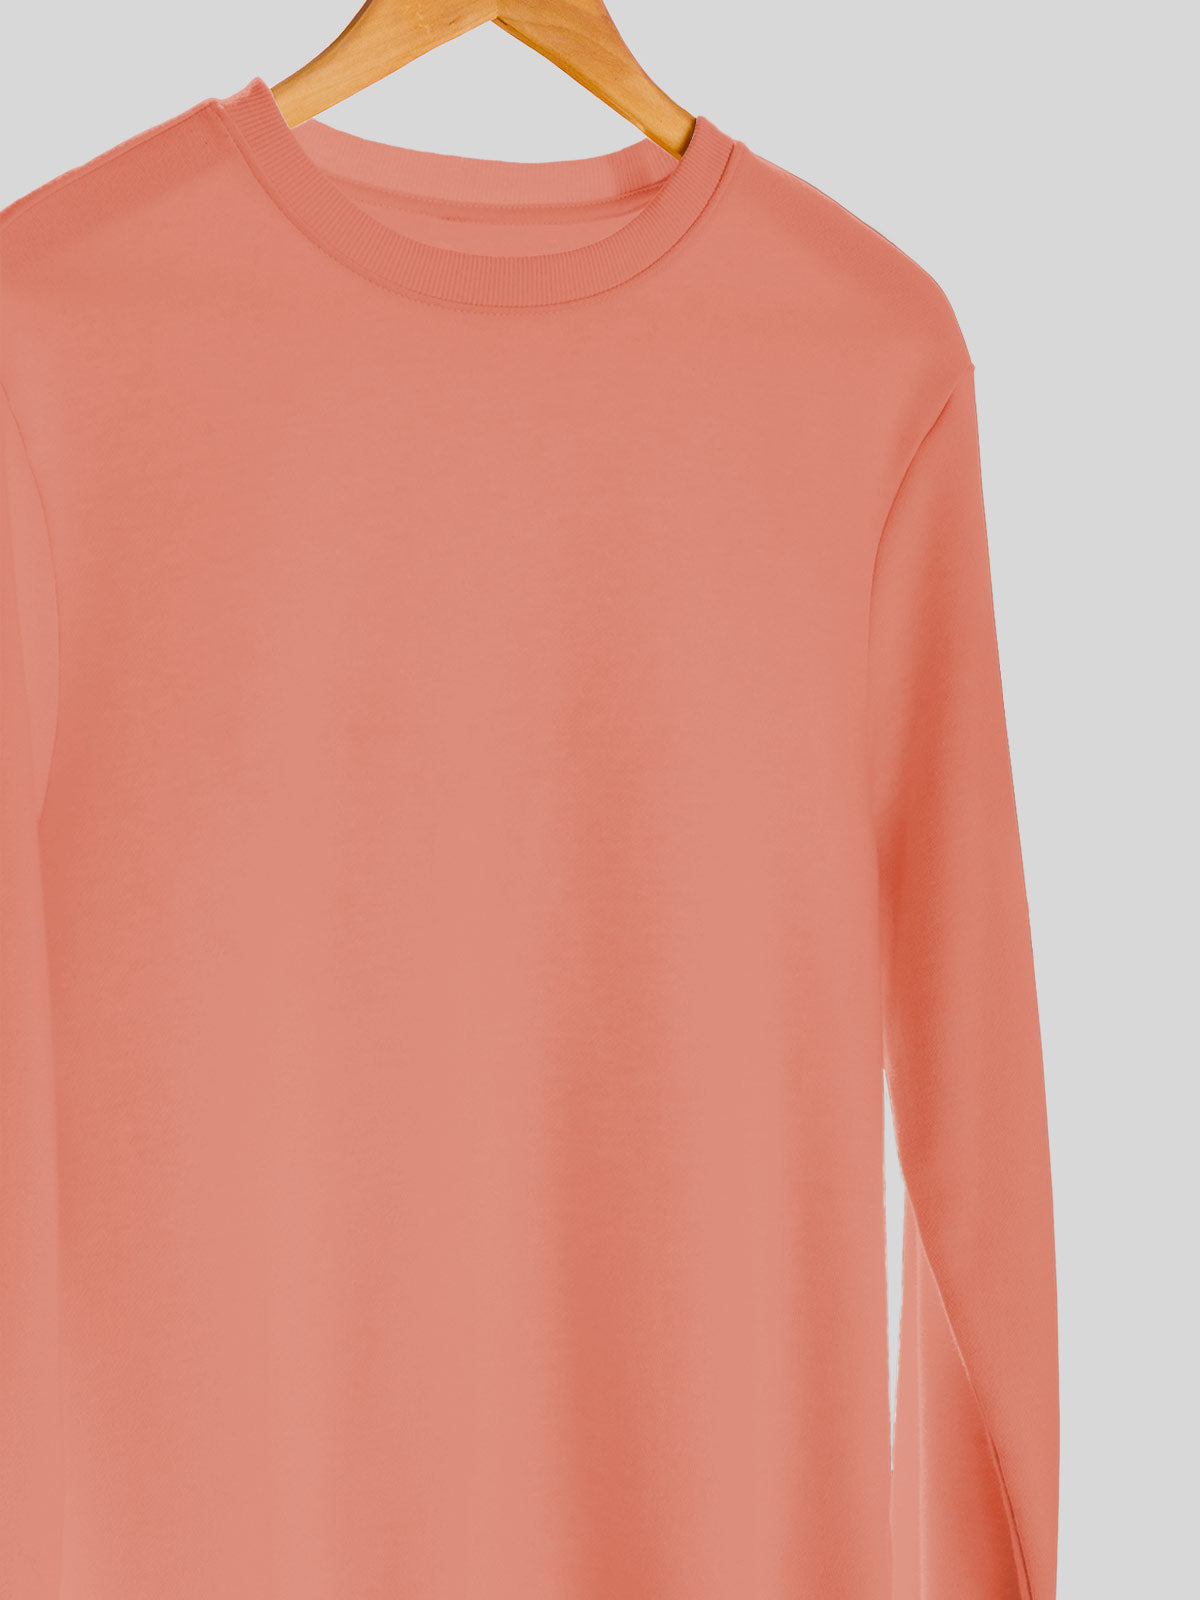 Coral Peach | Unisex Plain Sweatshirt